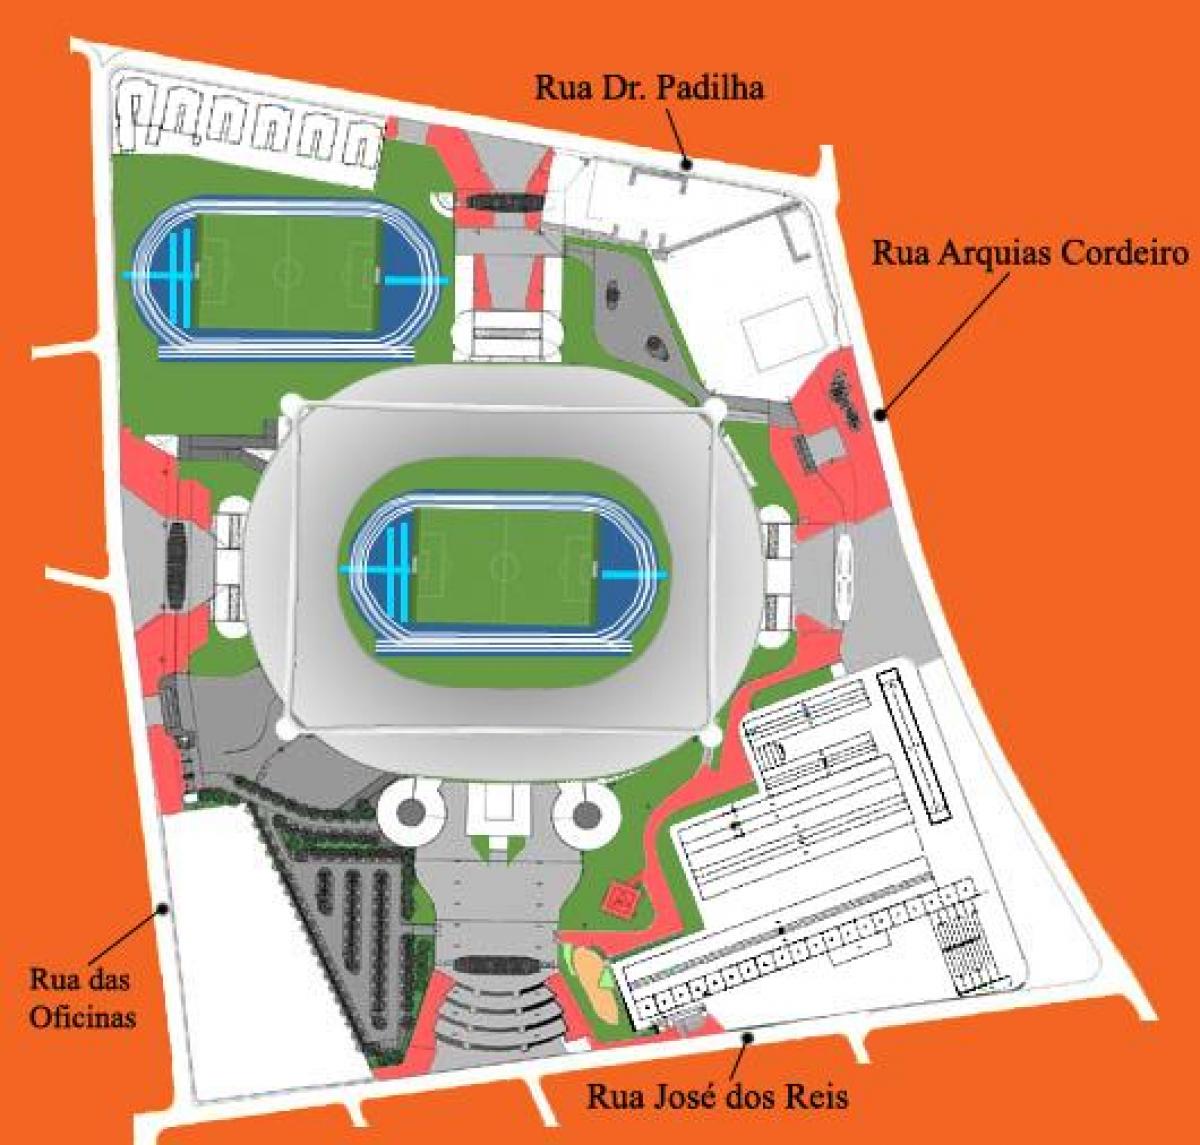 Kaart van het stadion Engenhão